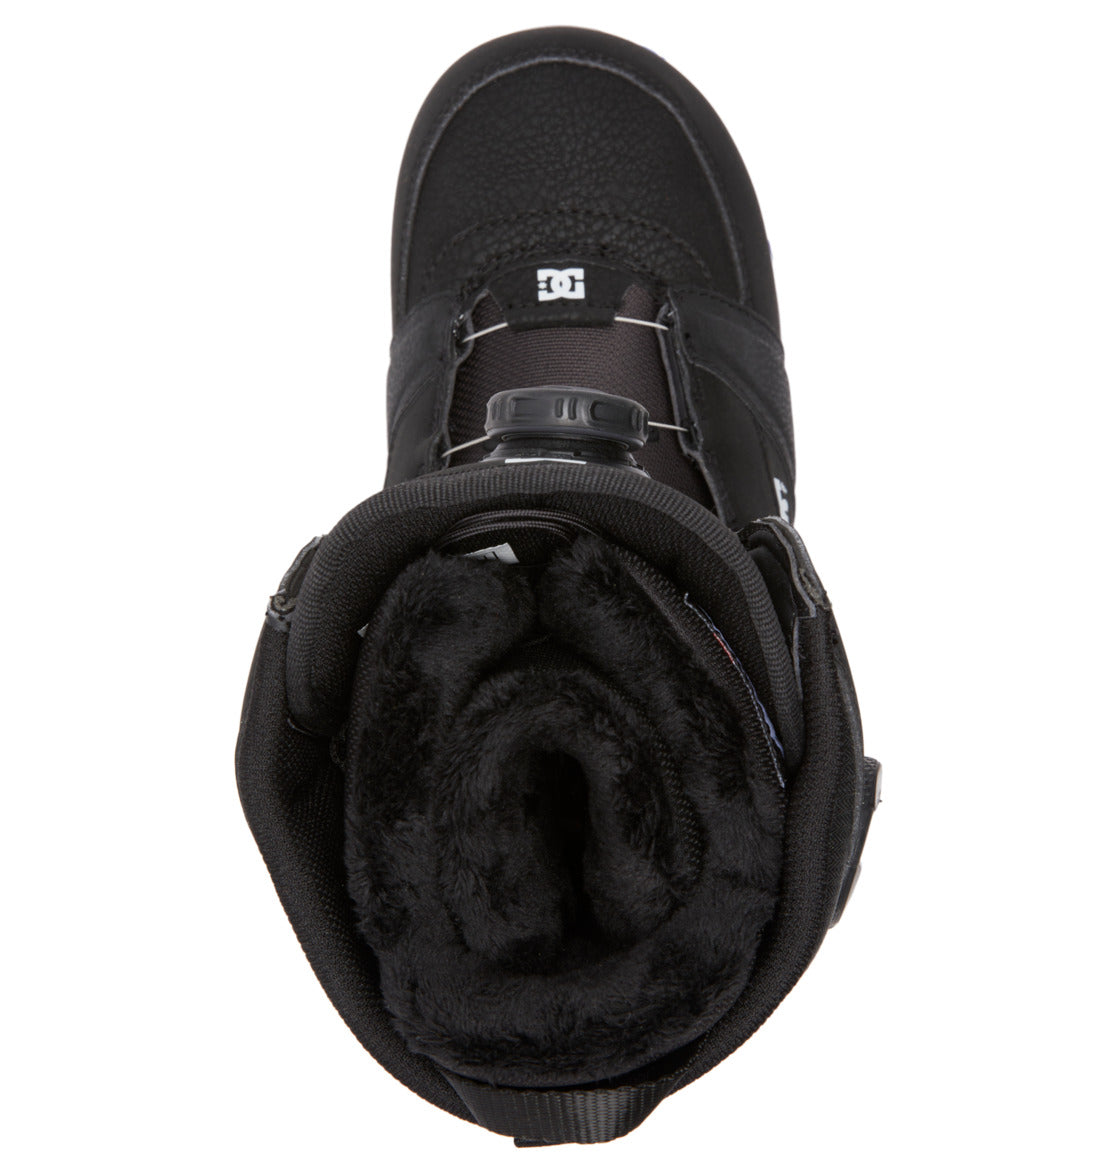 Women's Lotus BOA® Snowboard Boots - DC Shoes